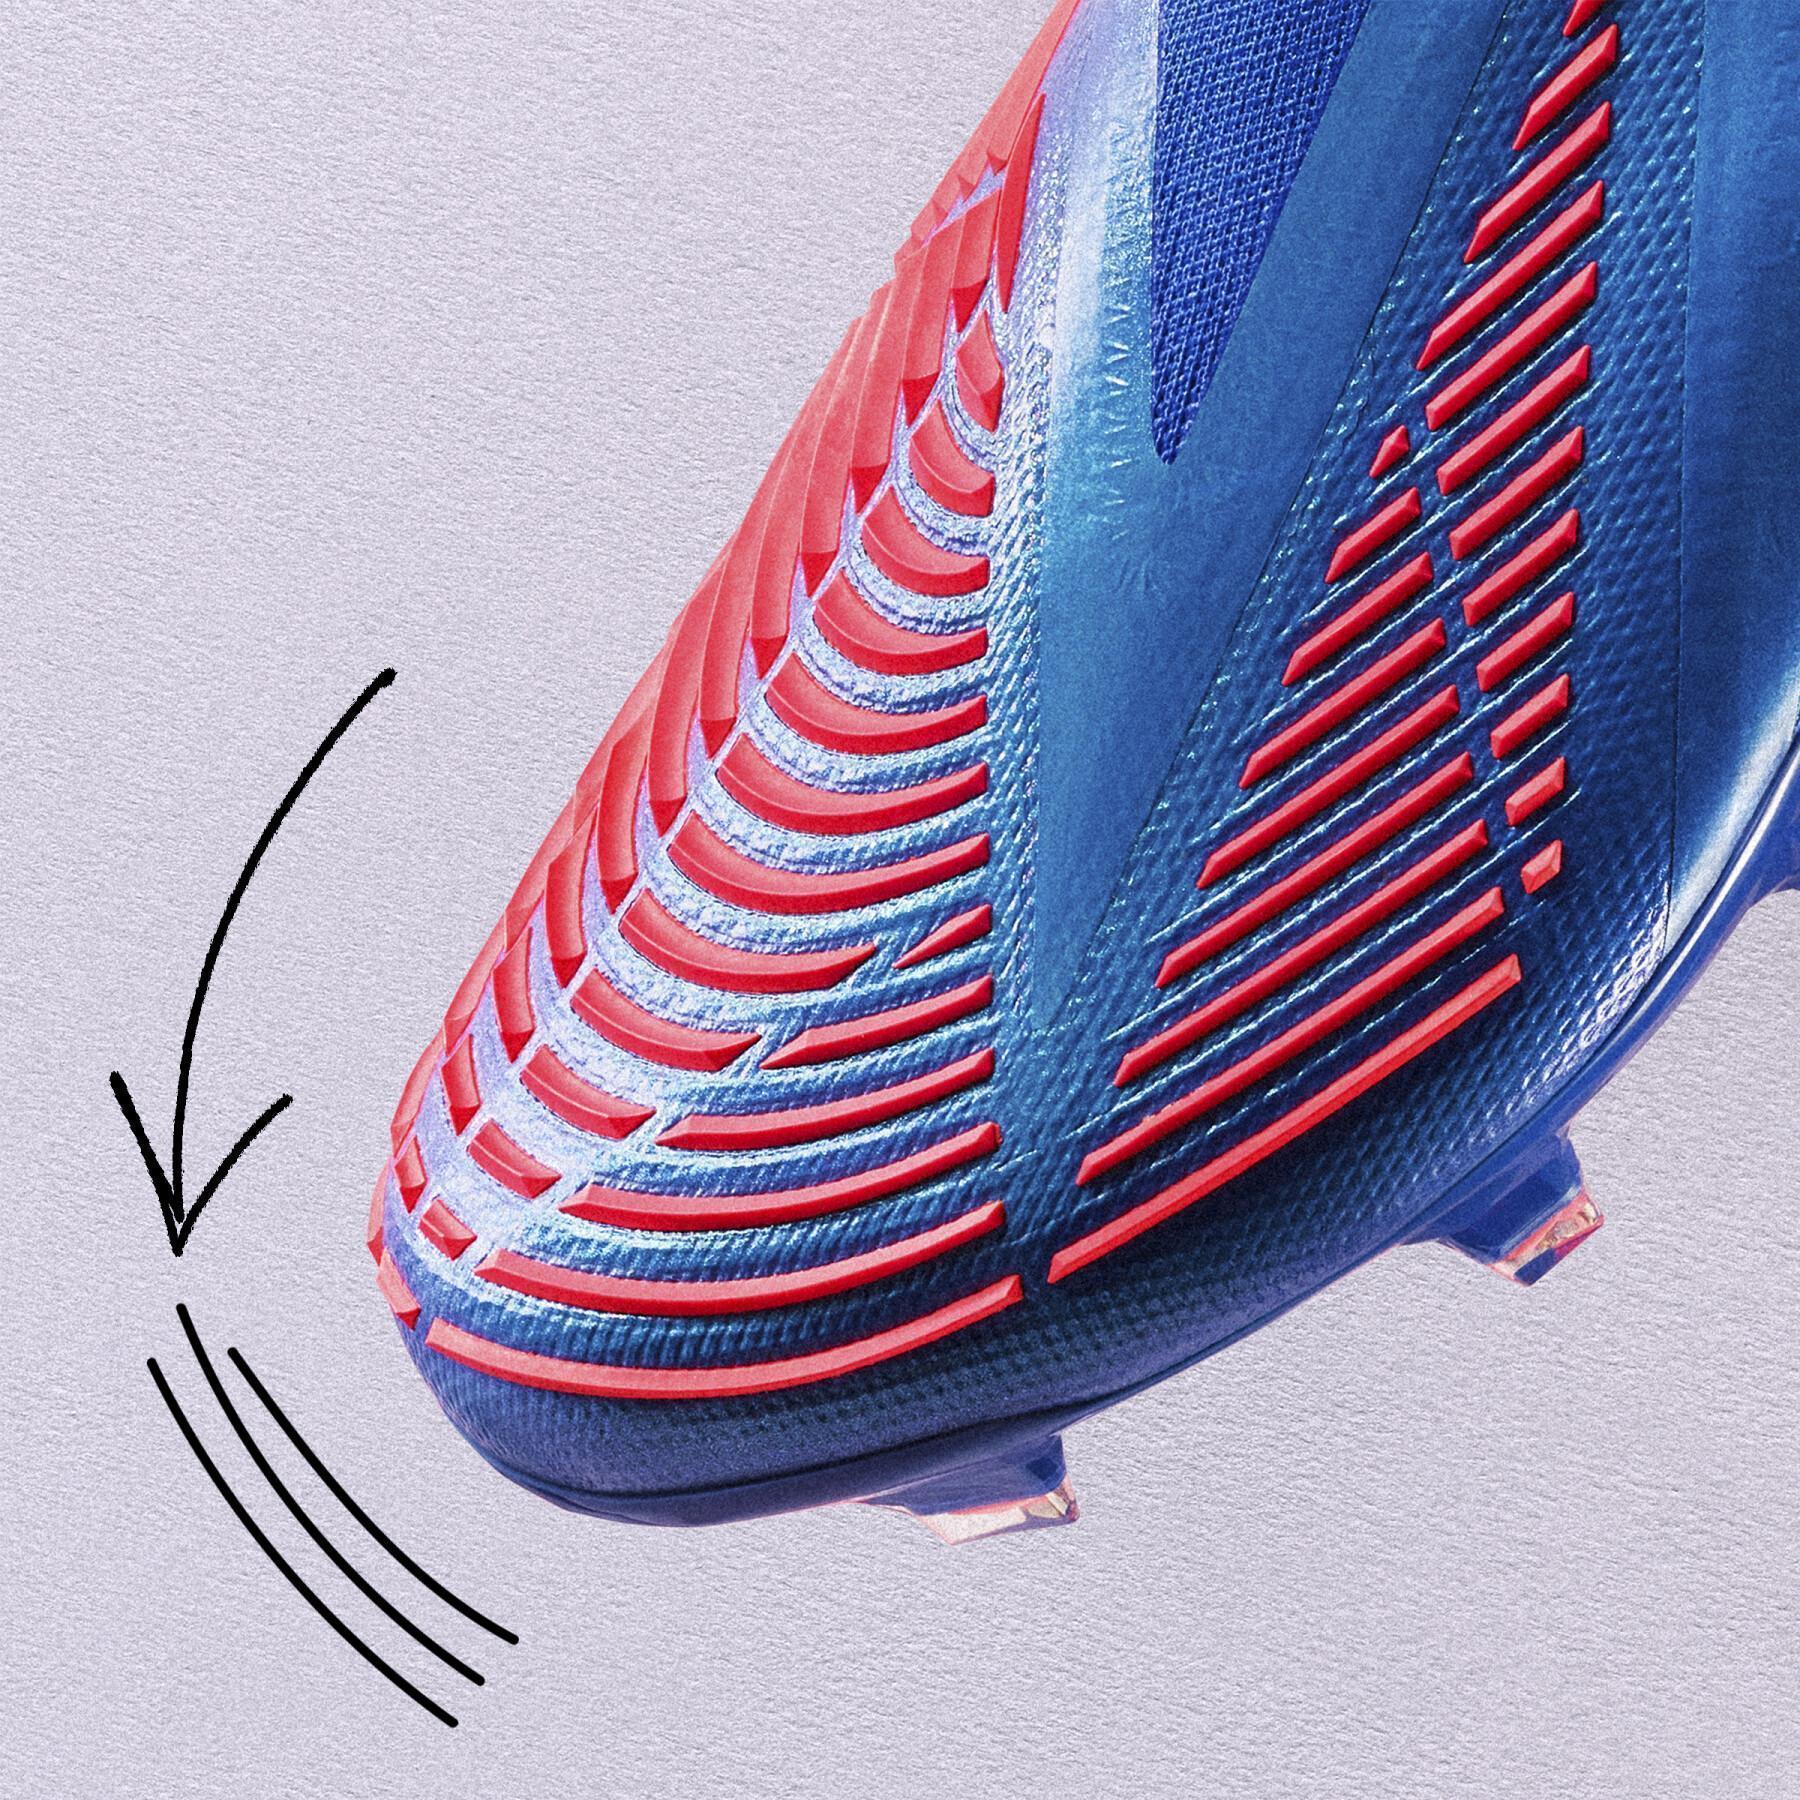 Voetbalschoenen adidas Predator Edge+ FG - Sapphire Edge Pack